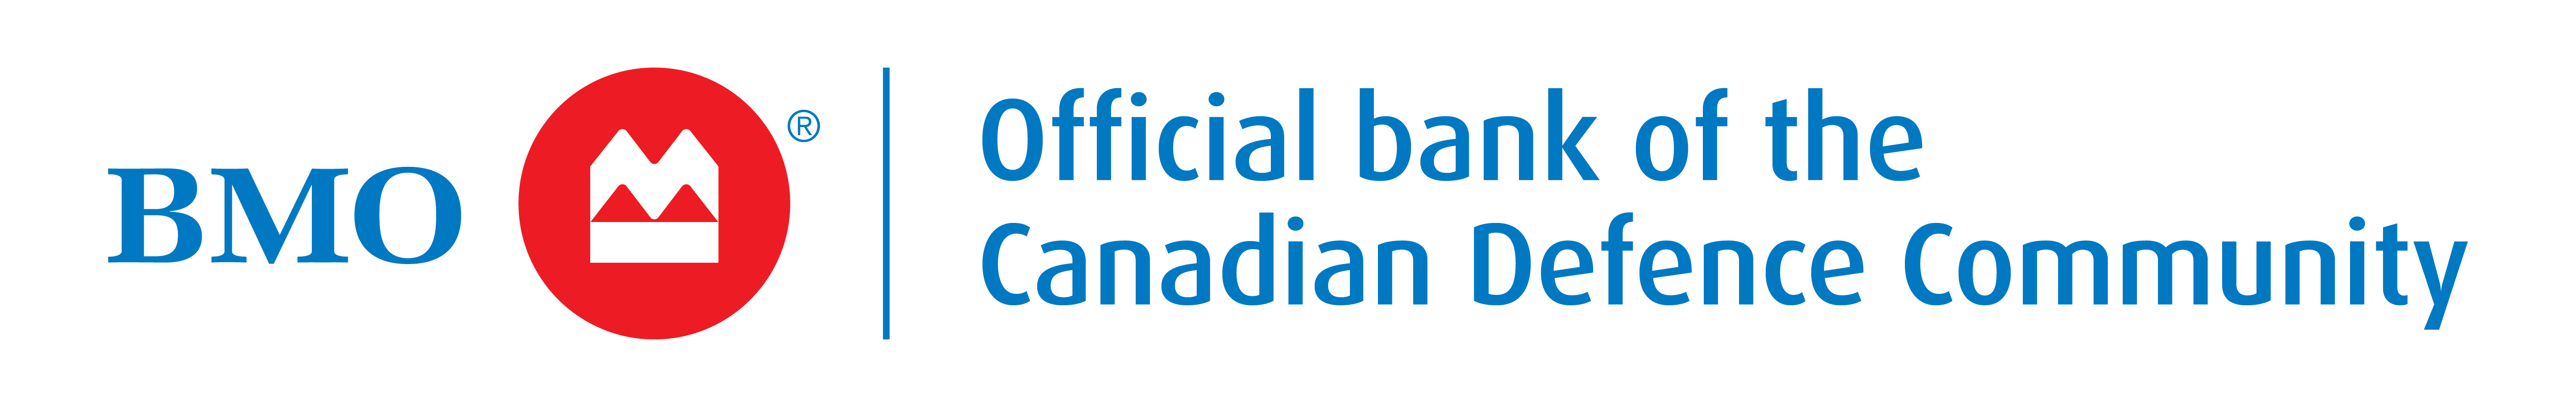 2018 CDCB Customer Appreciation Contest | Canadian Defence Community